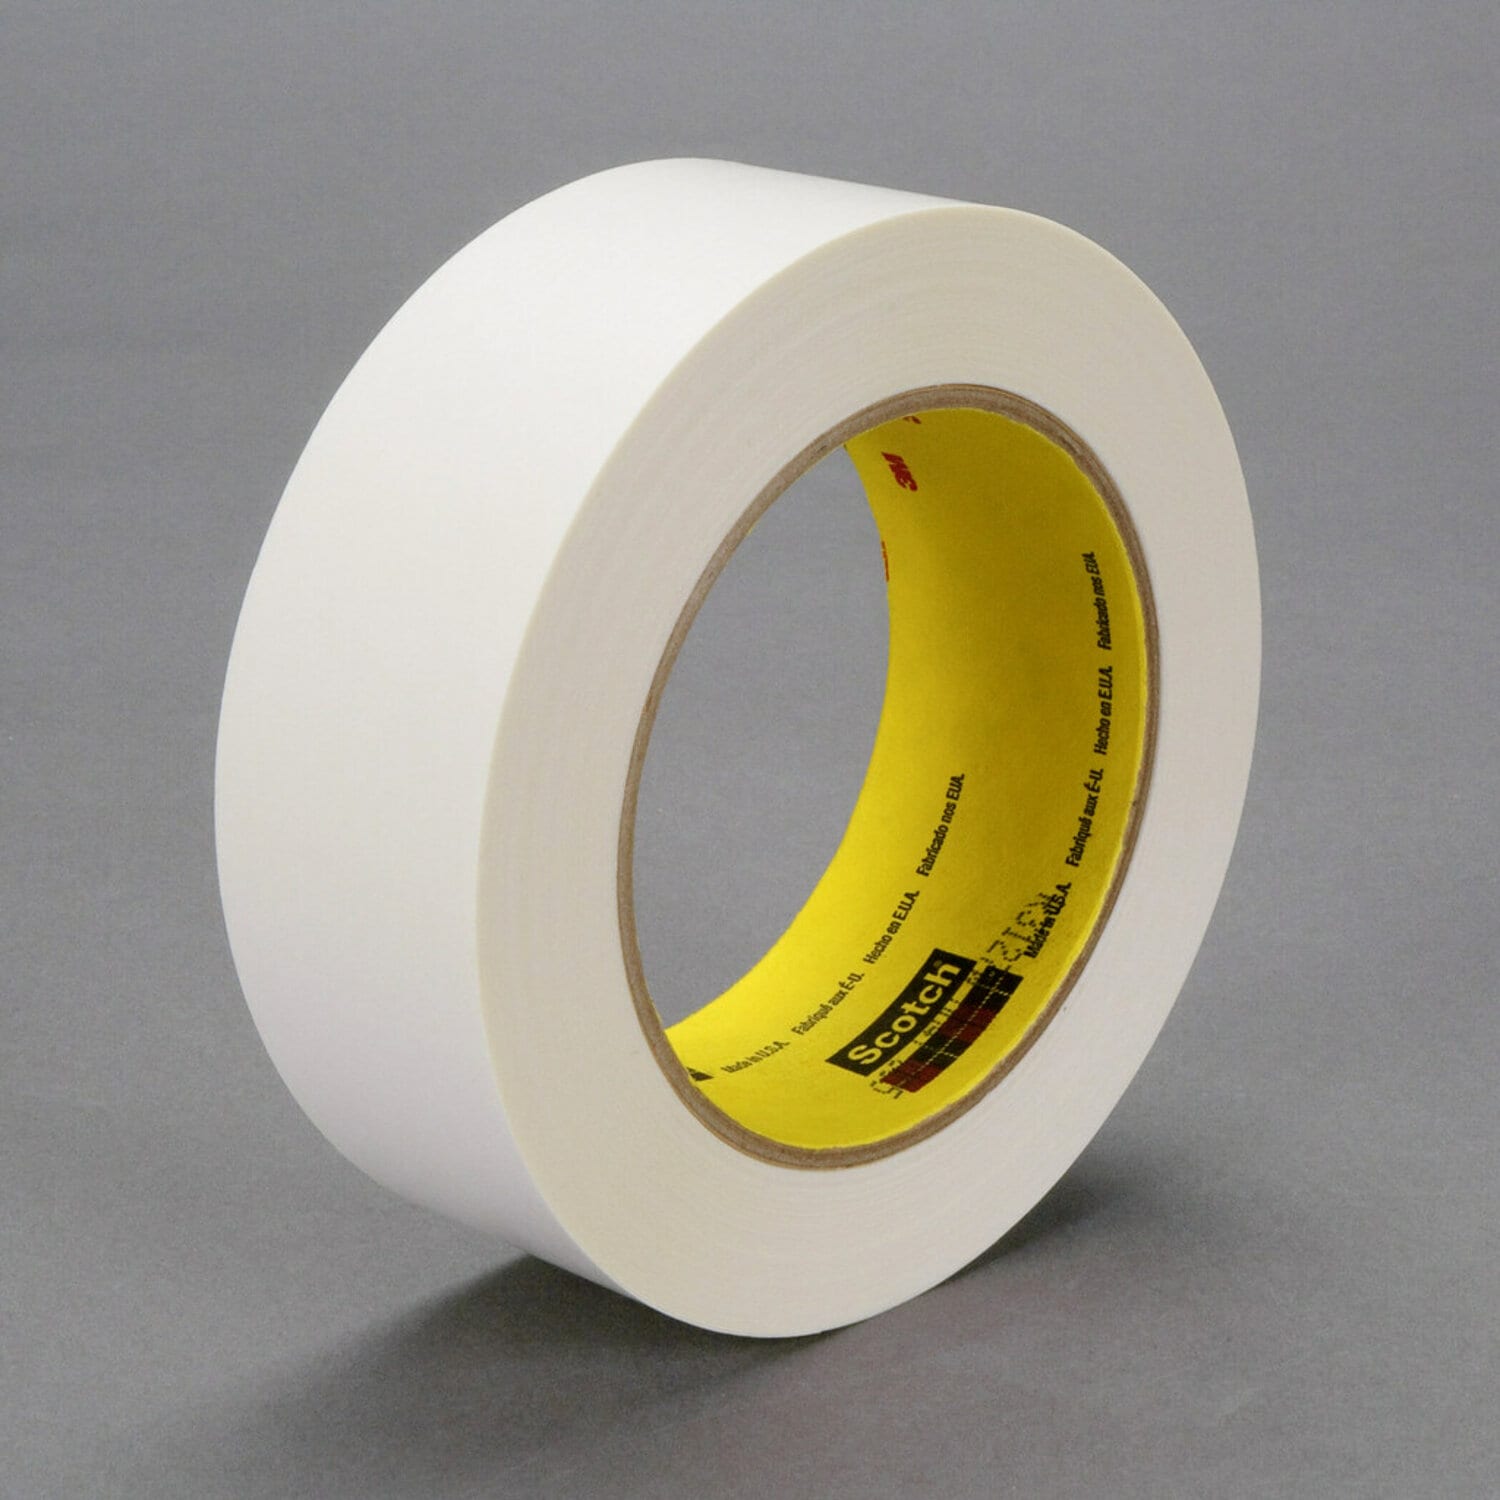 7100027989 - 3M Repulpable Flatback Tape R3127, White, 72 mm x 55 m, 4.2 mil, 12
rolls per case